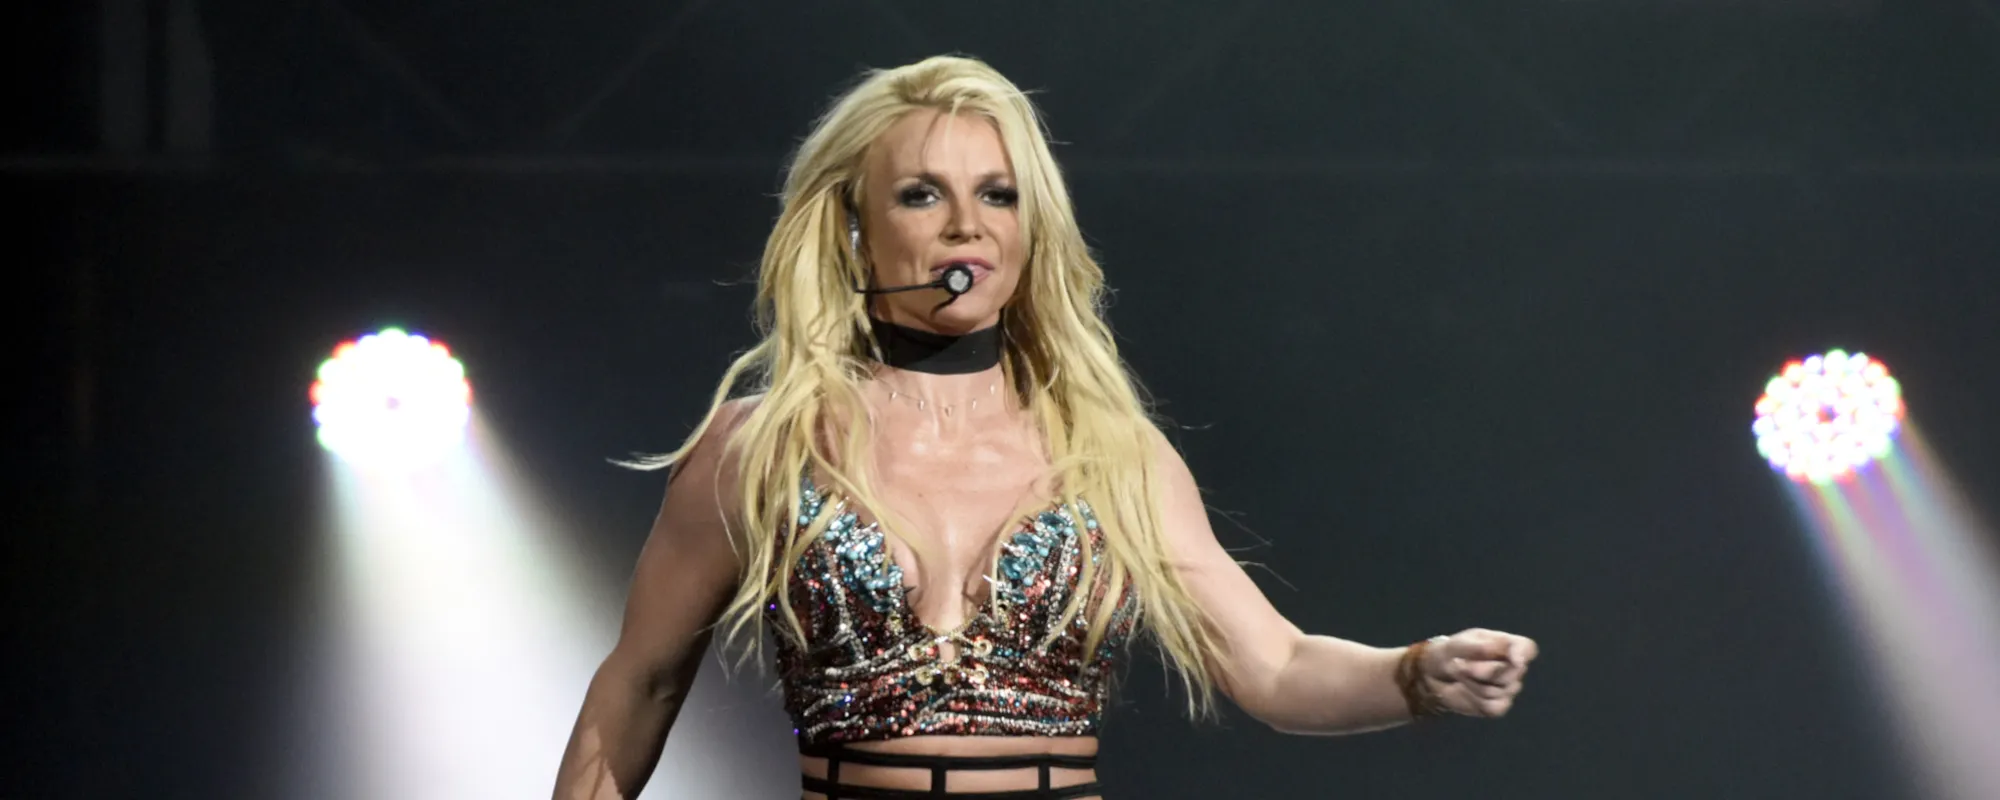 Britney Spears Thanks Lady Gaga, Chides Christina Aguilera for “Refusing to Speak” on Conservatorship